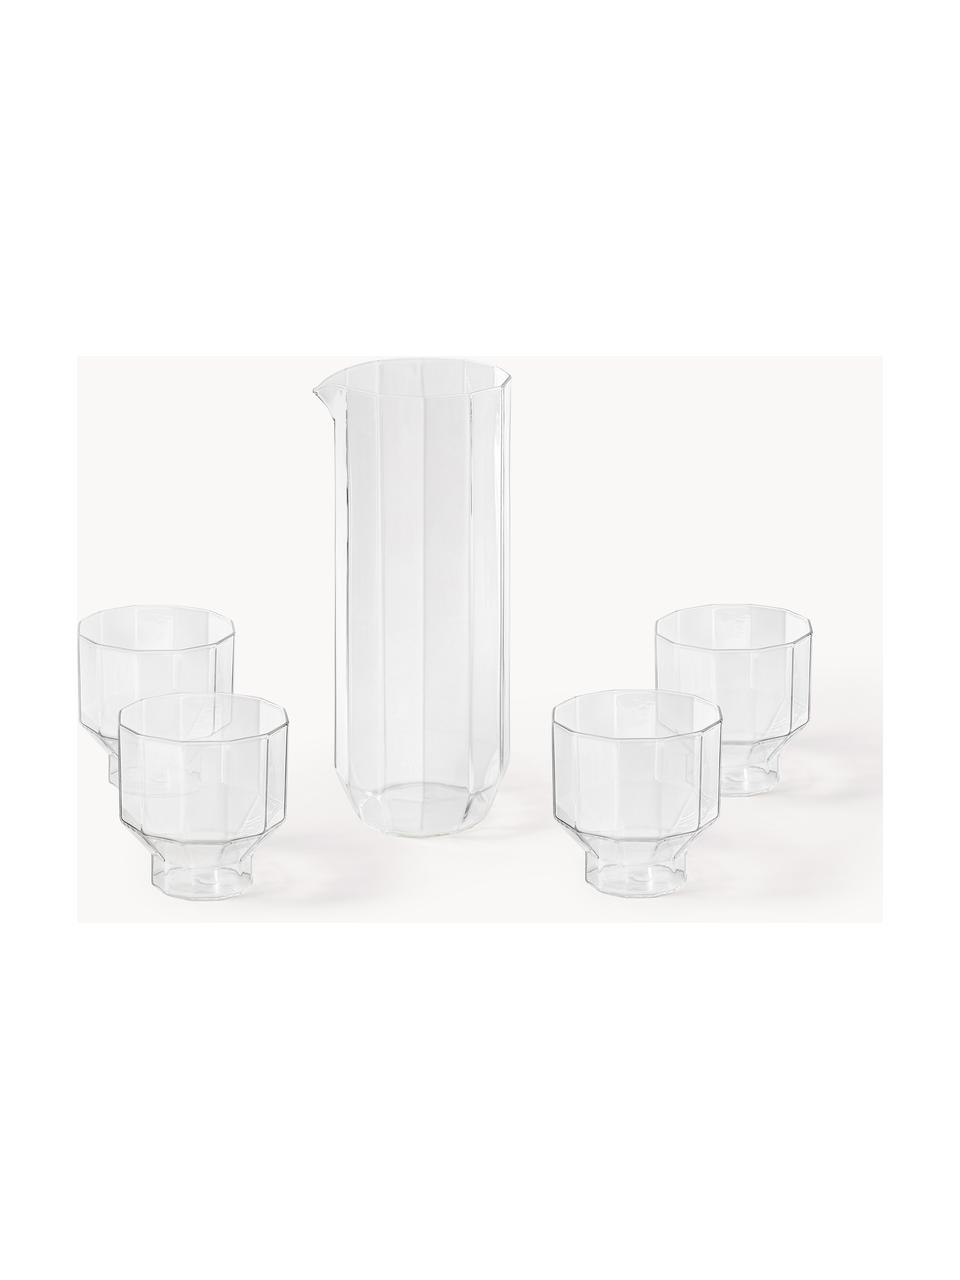 Set de jarra soplada con vasos Angoli, 5 pzas., Vidrio de borosilicato, Transparente, Set de diferentes tamaños